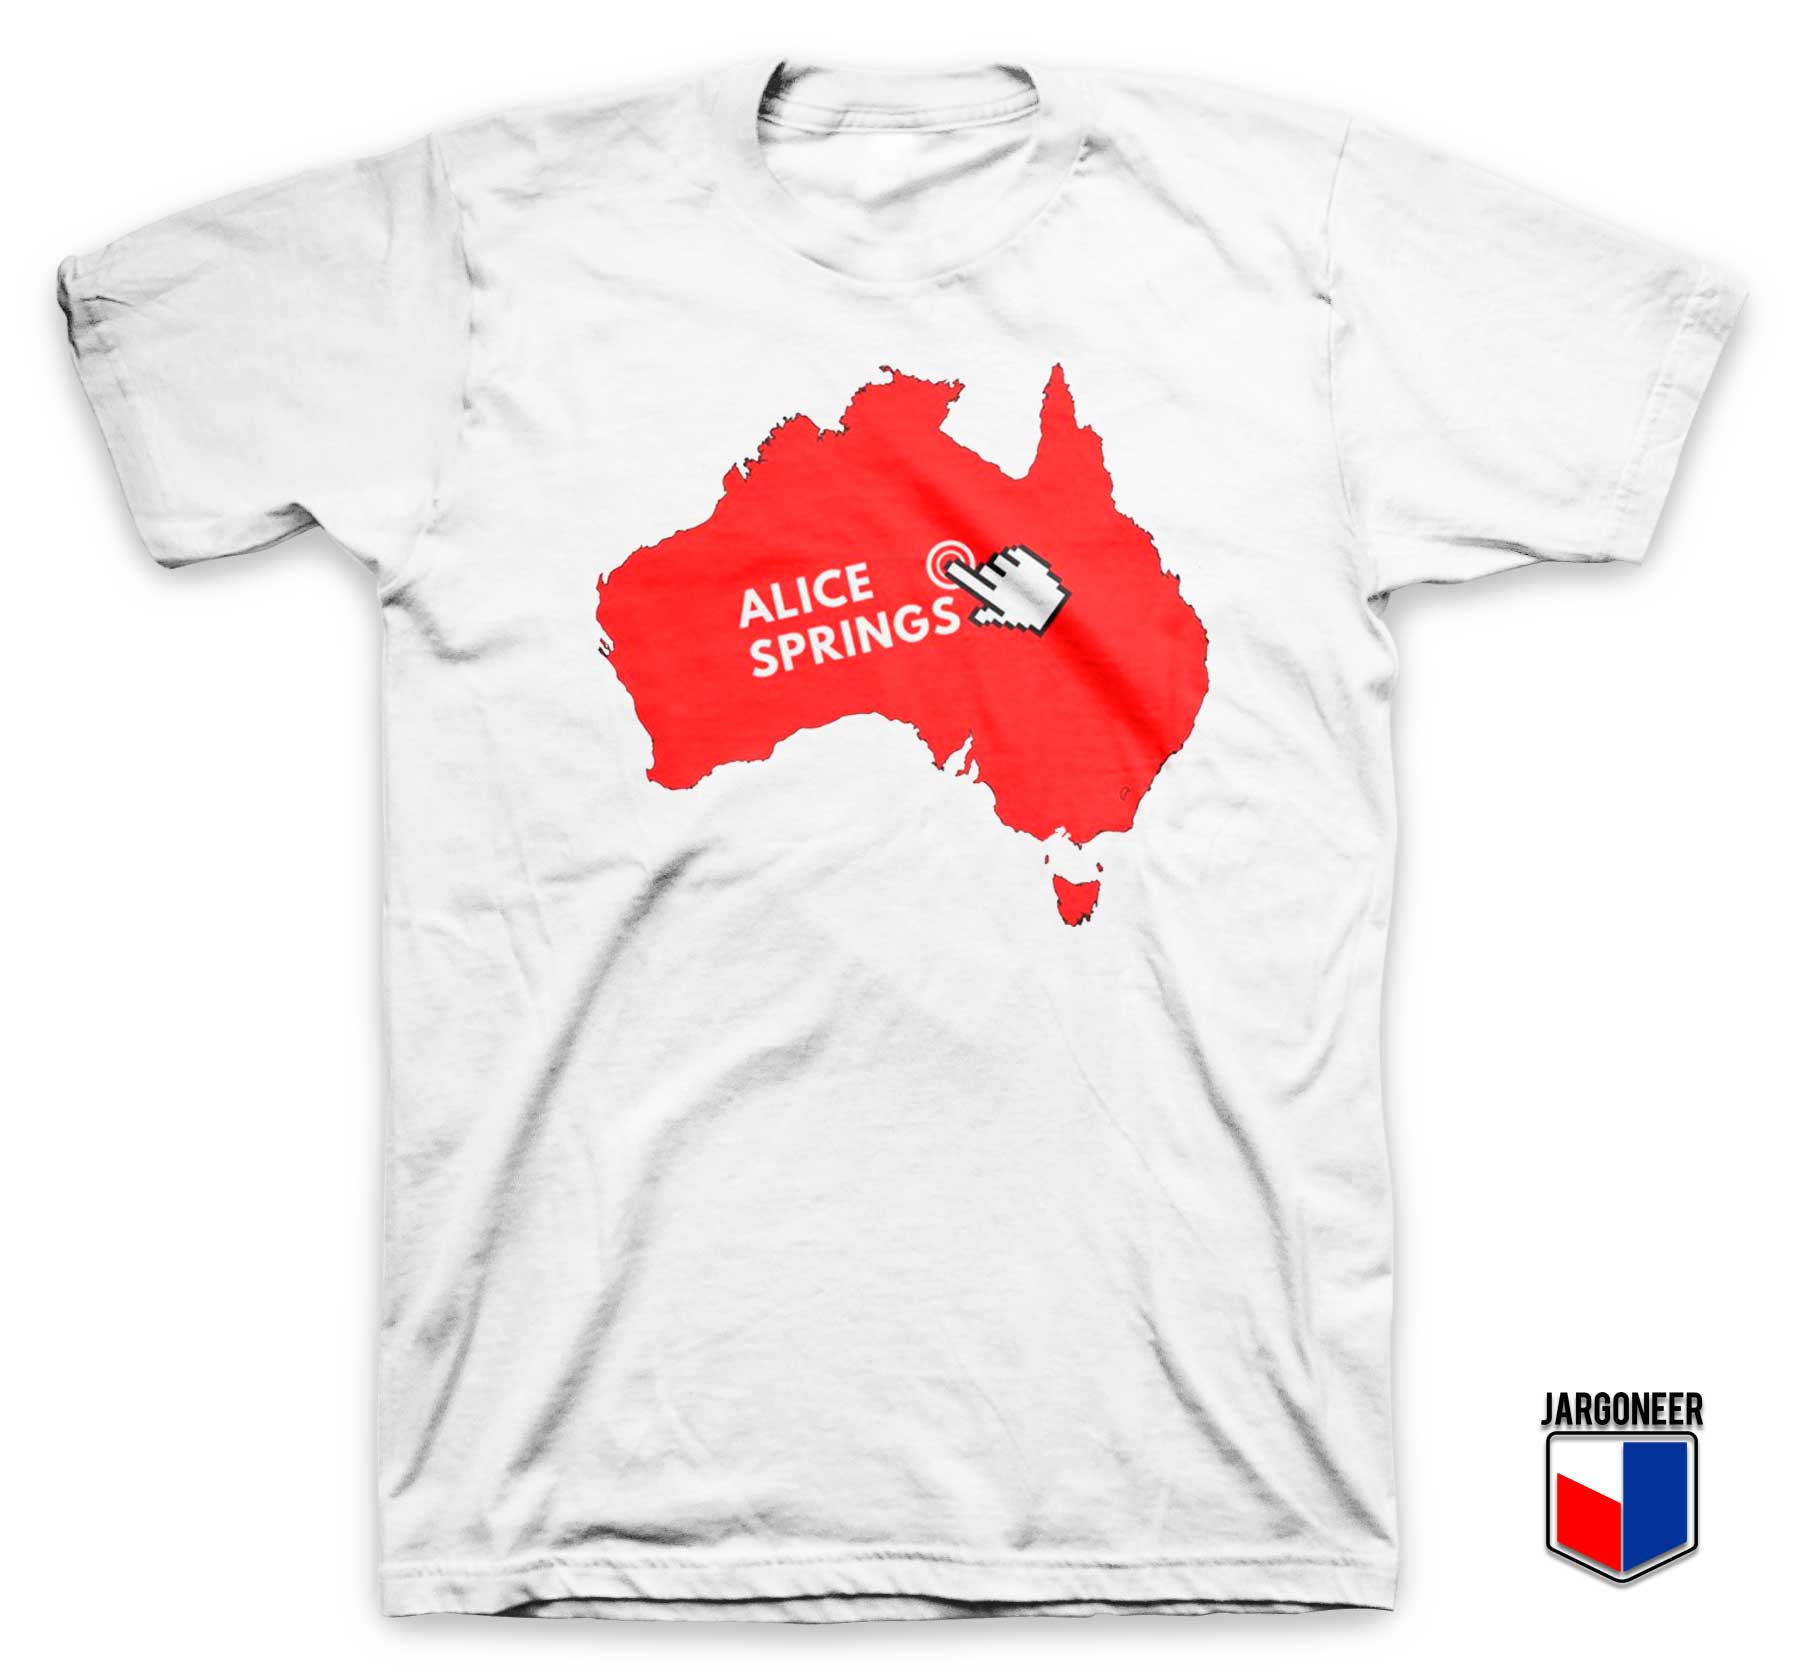 Alice Springs Show Day White T Shirt - Shop Unique Graphic Cool Shirt Designs